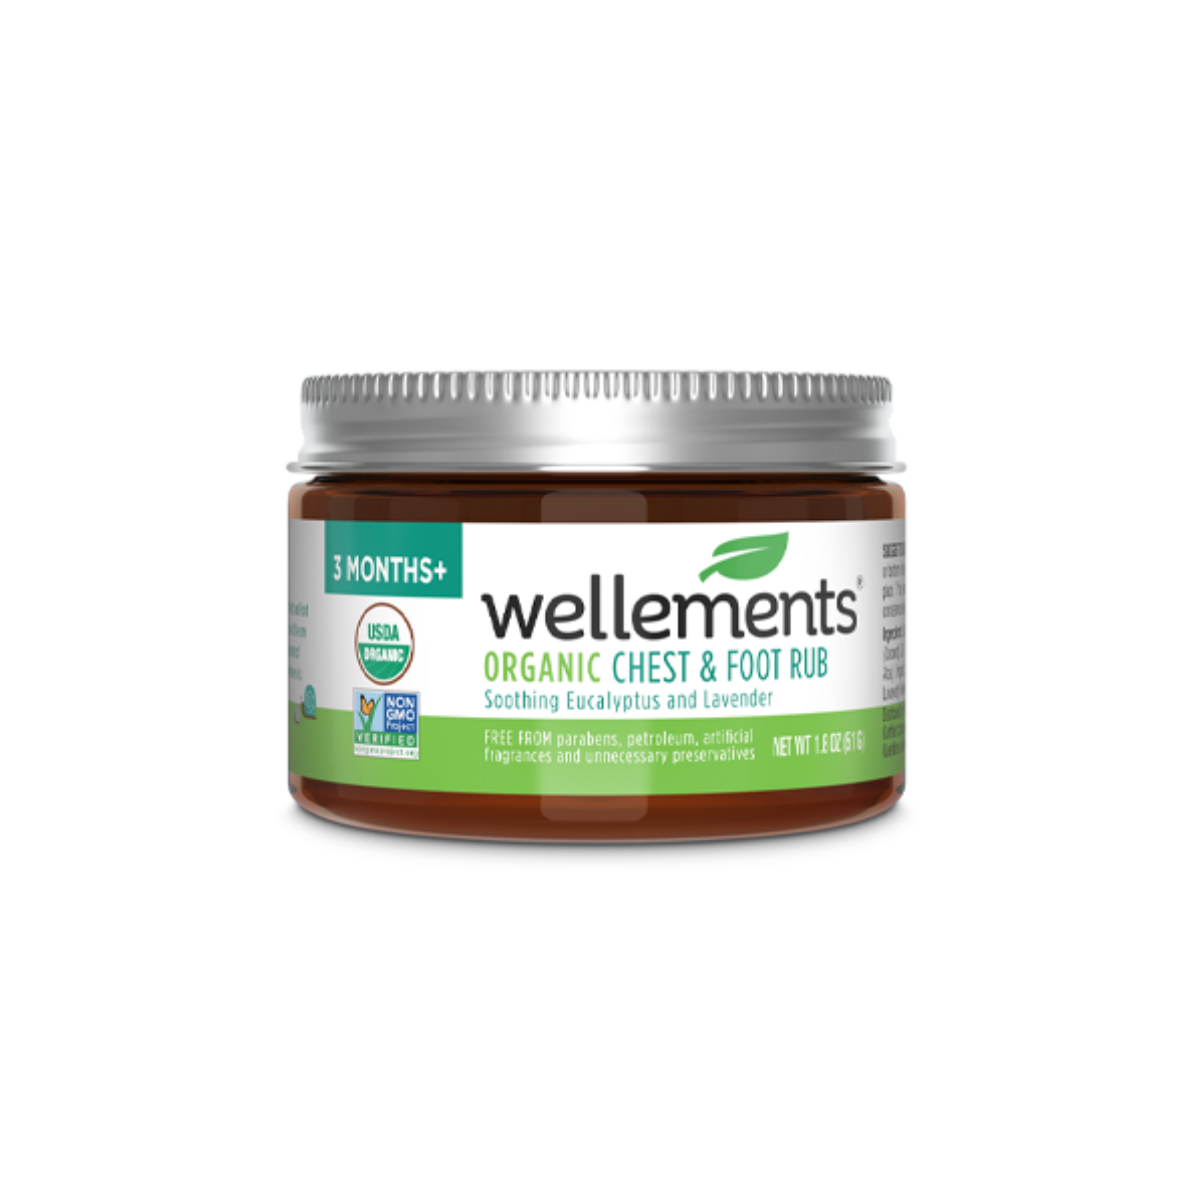 Wellements Organic Chest & Foot Rub